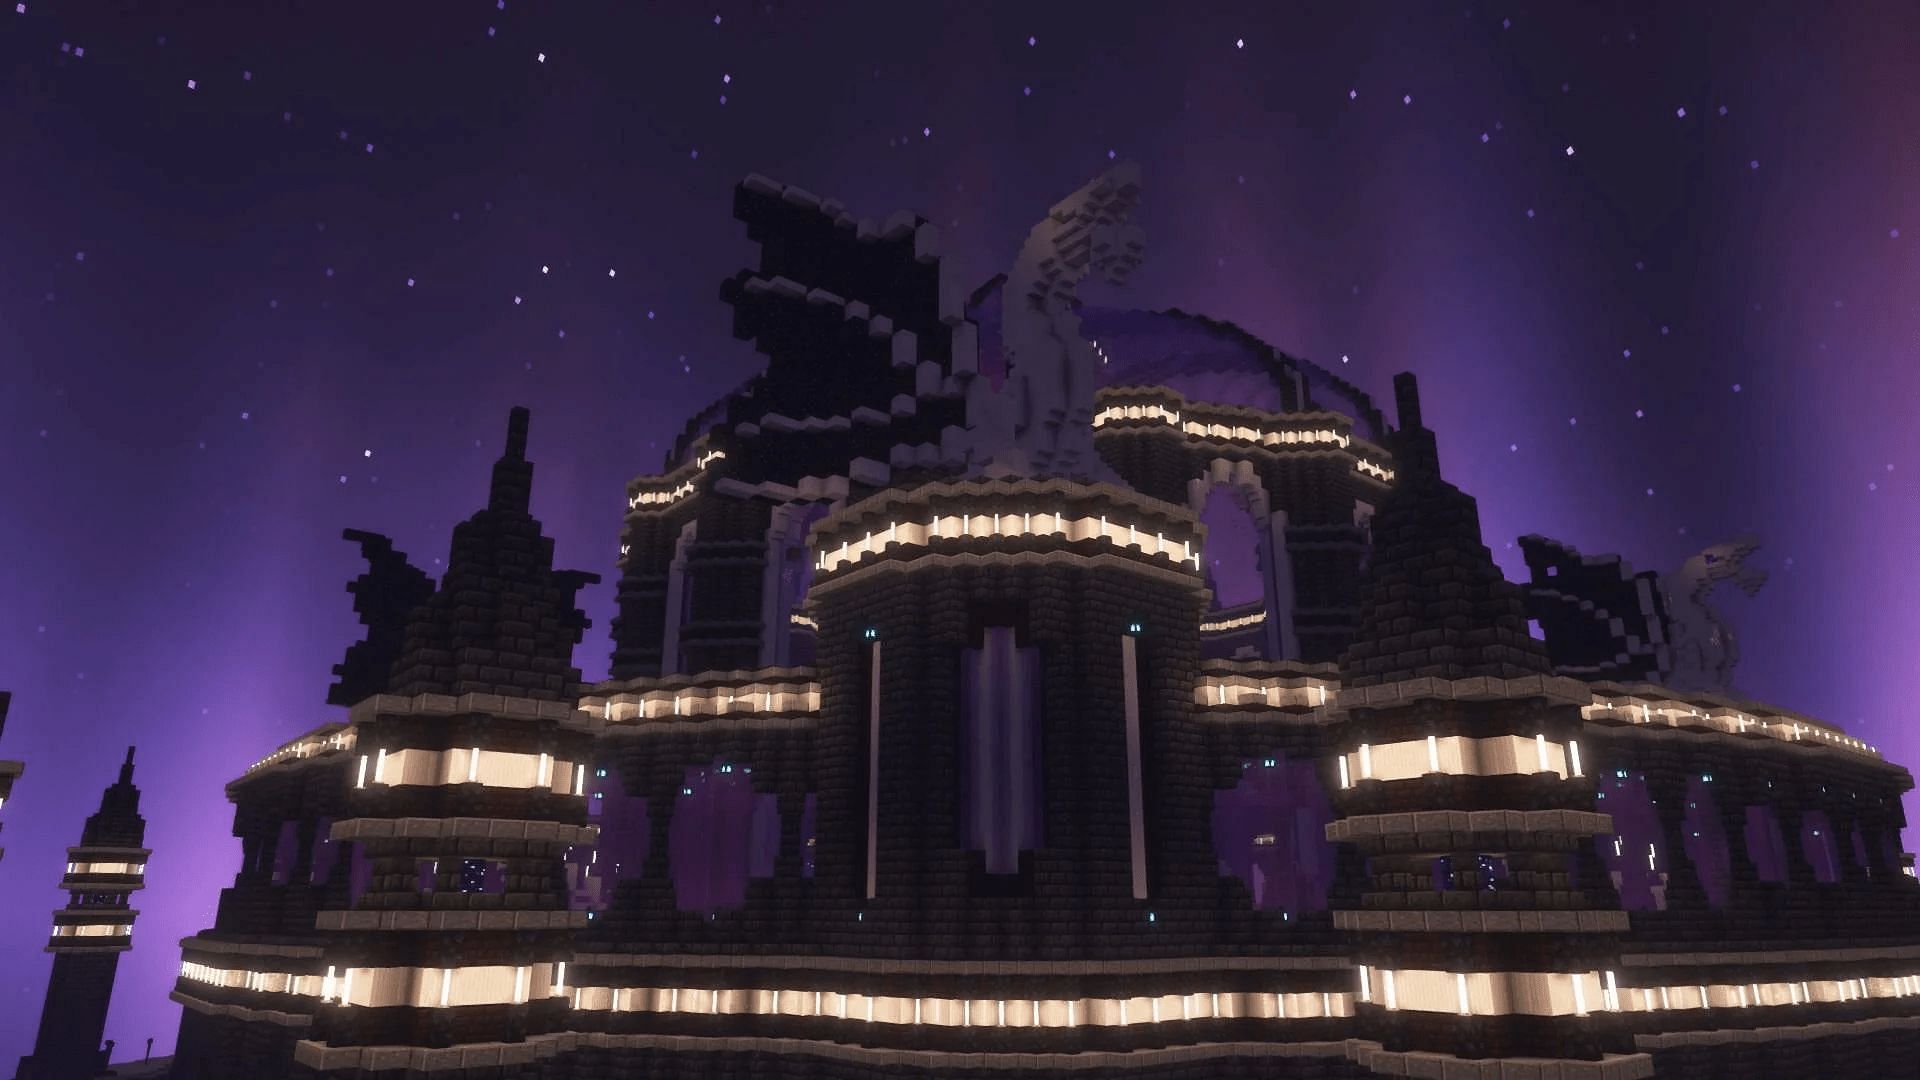 7 Best Minecraft Castle Ideas  Coolest Castle Designs in Minecraft - Dot  Esports